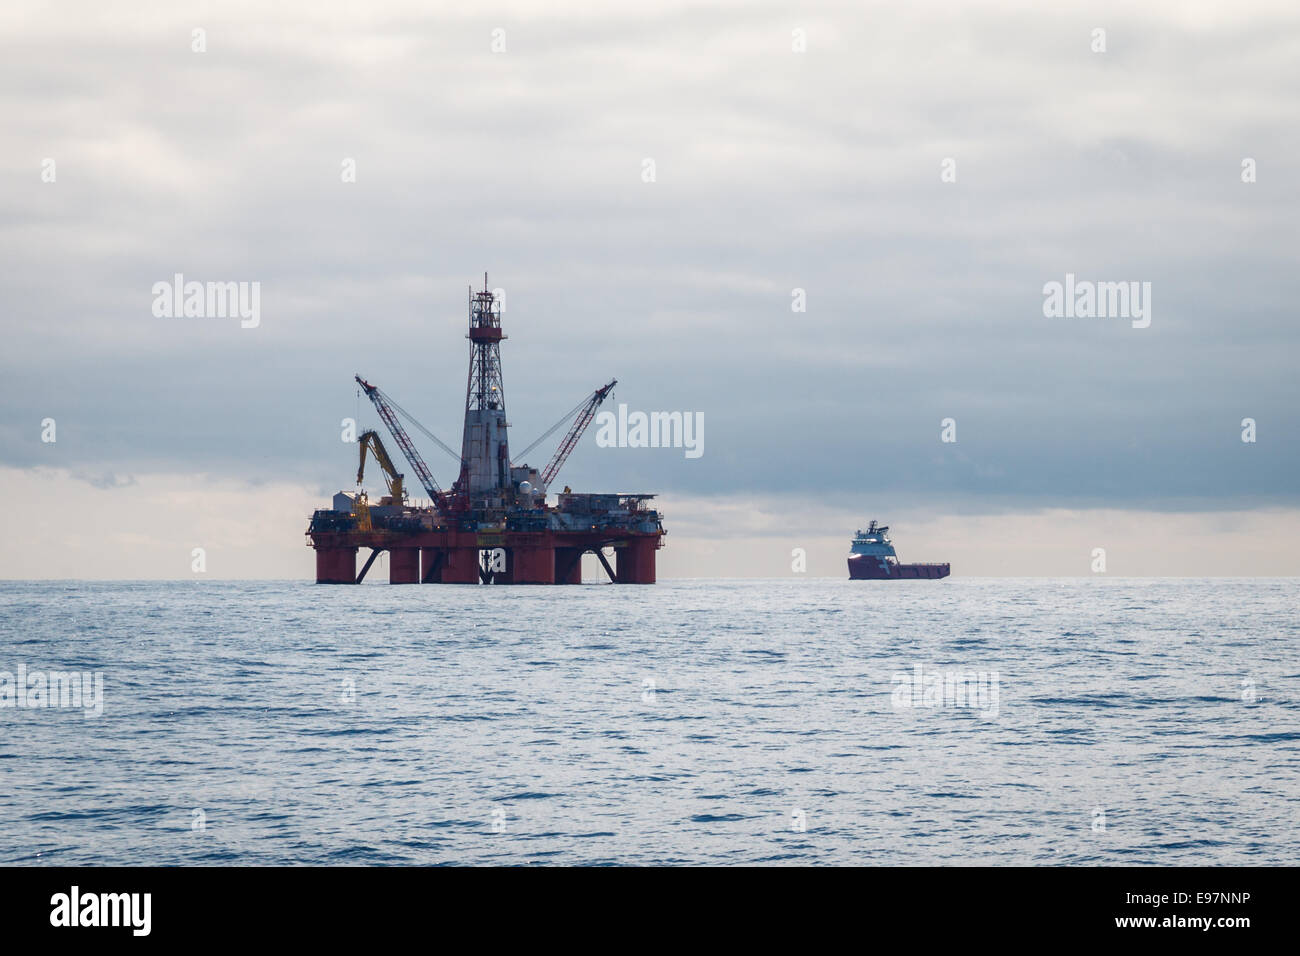 La plataforma de perforación petrolera Transocean líder, en el Mar de Barents, Noruega. Foto de stock